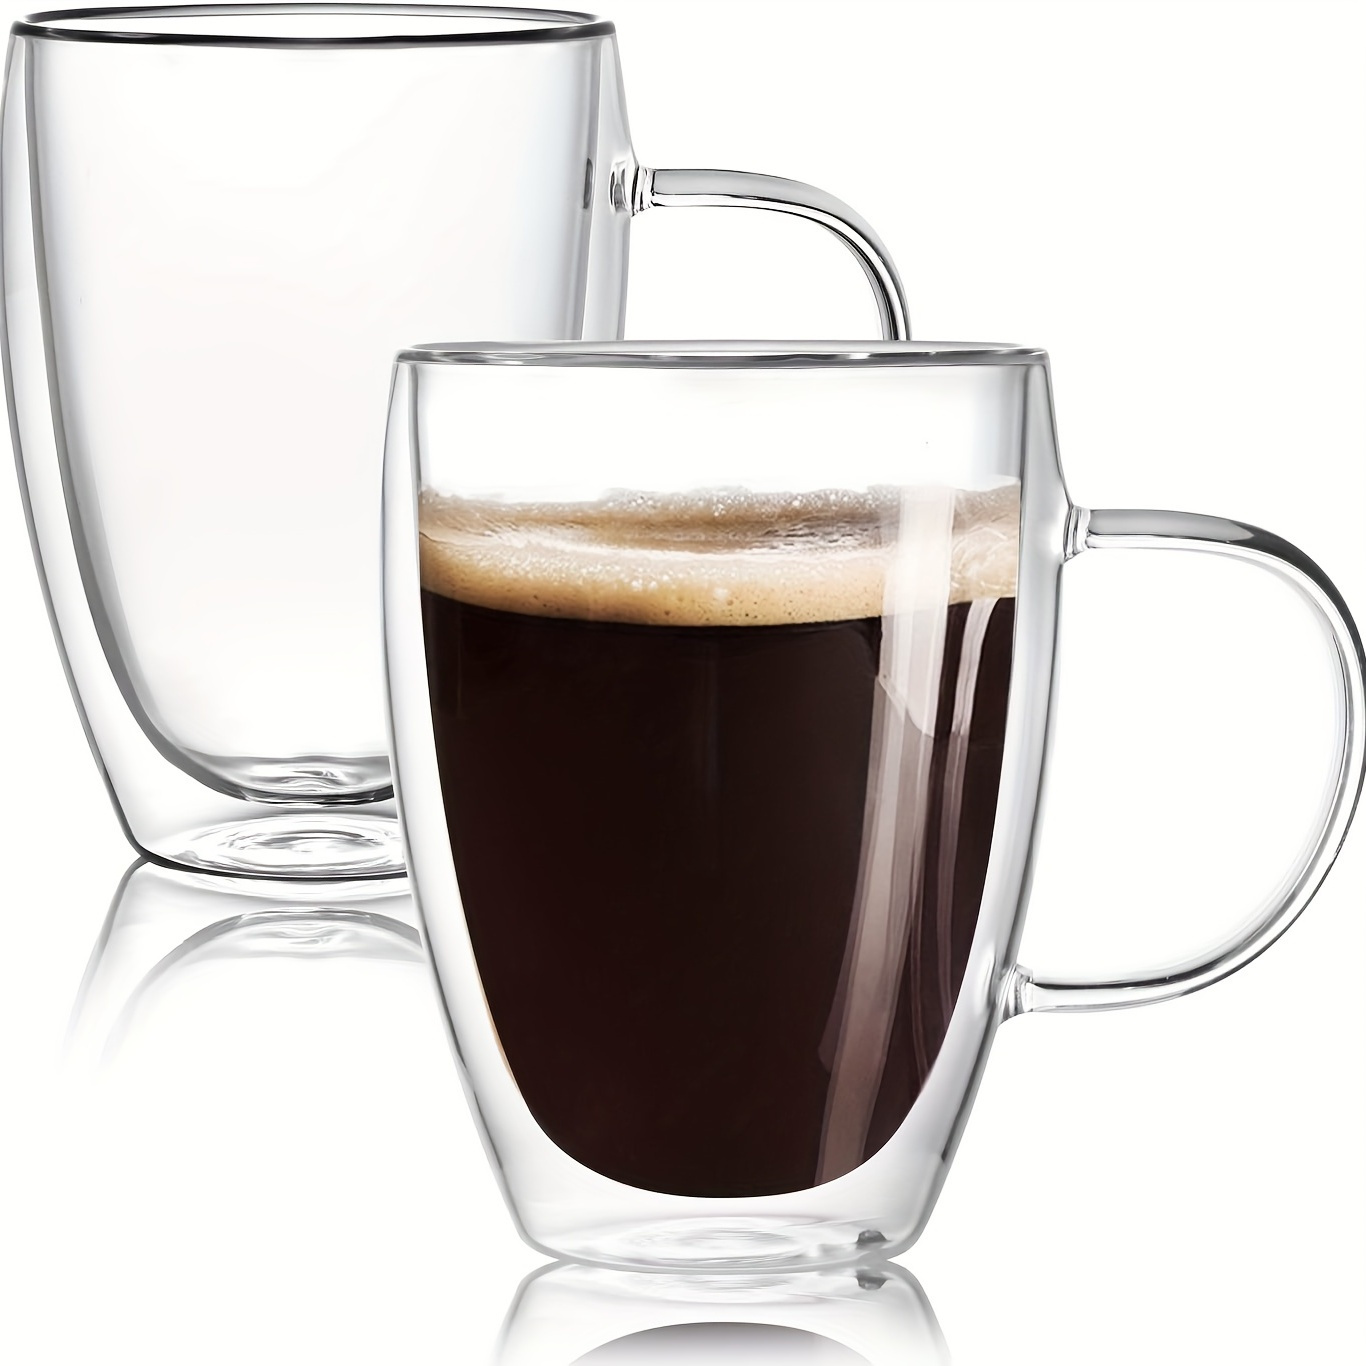 2 Pack Double Wall Cappuccino Glass Mugs 3-6oz, Clear Coffee Mug Espresso Mug  Cups,Double Wall Insulated Glass Mug with Handles (Include 2 Spoons) 